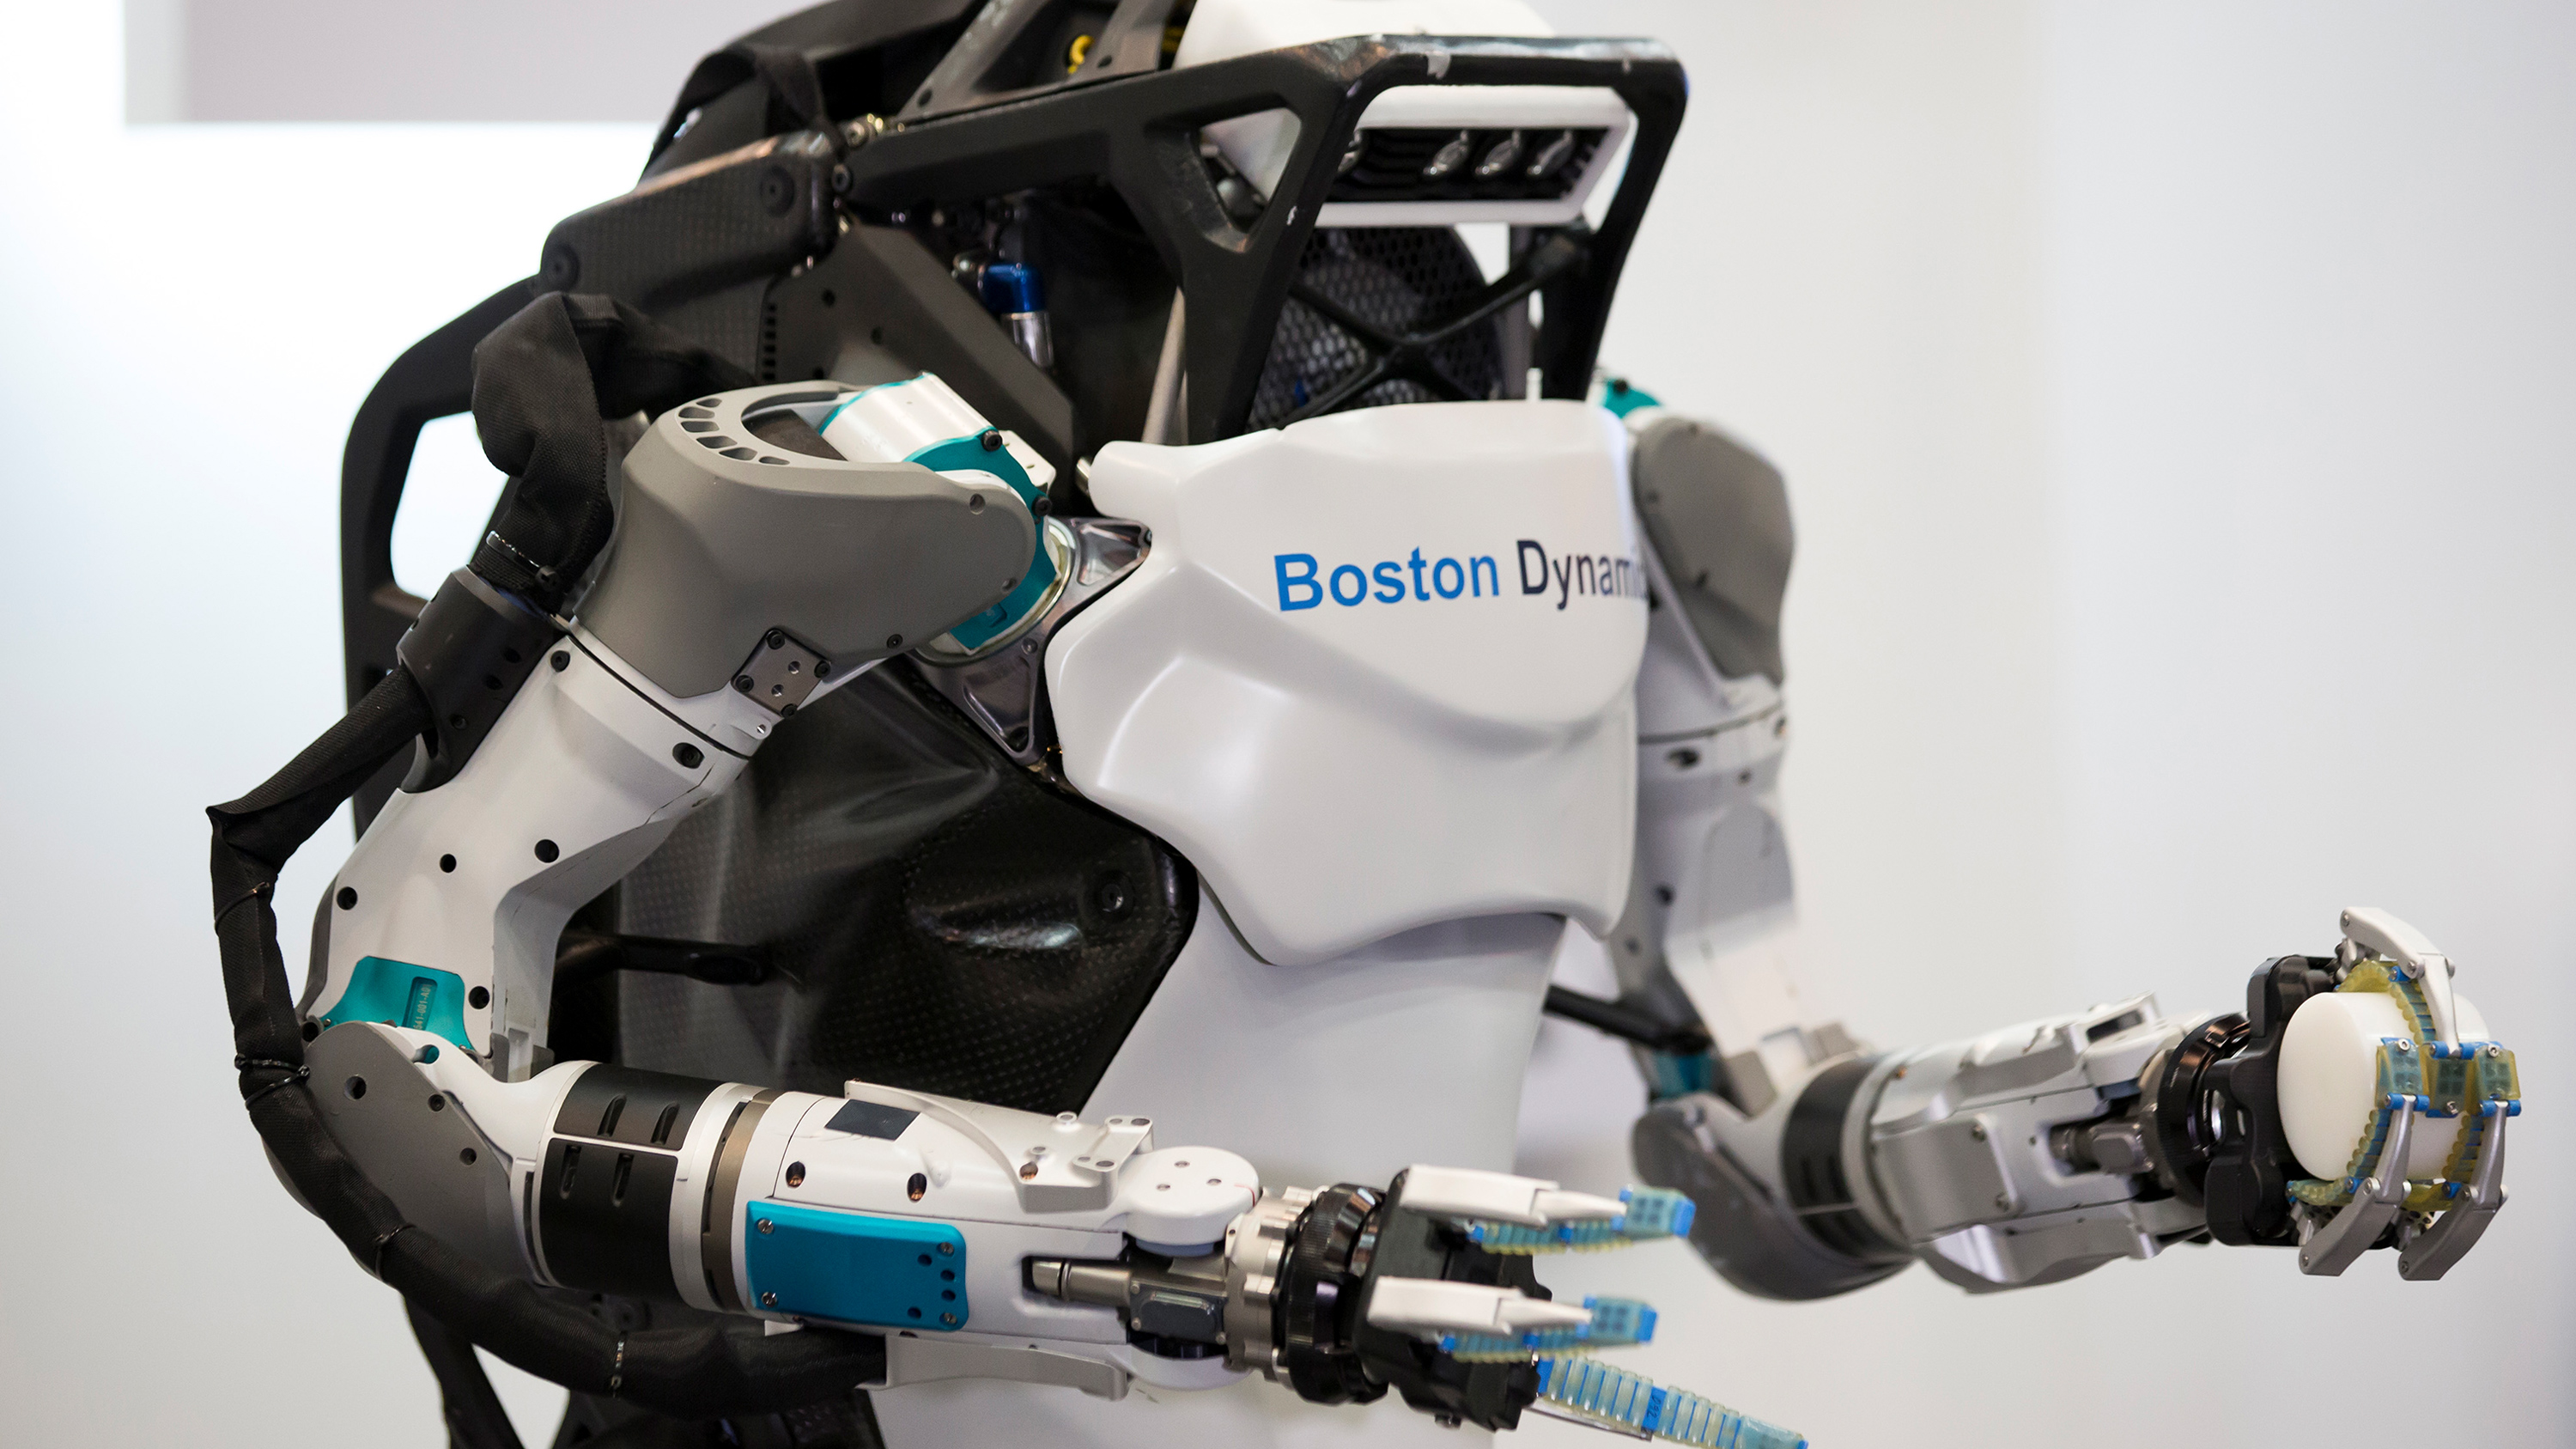 Boston Dynamics Tease Robot Uprising With 'Atlas' Scaffolding Demo